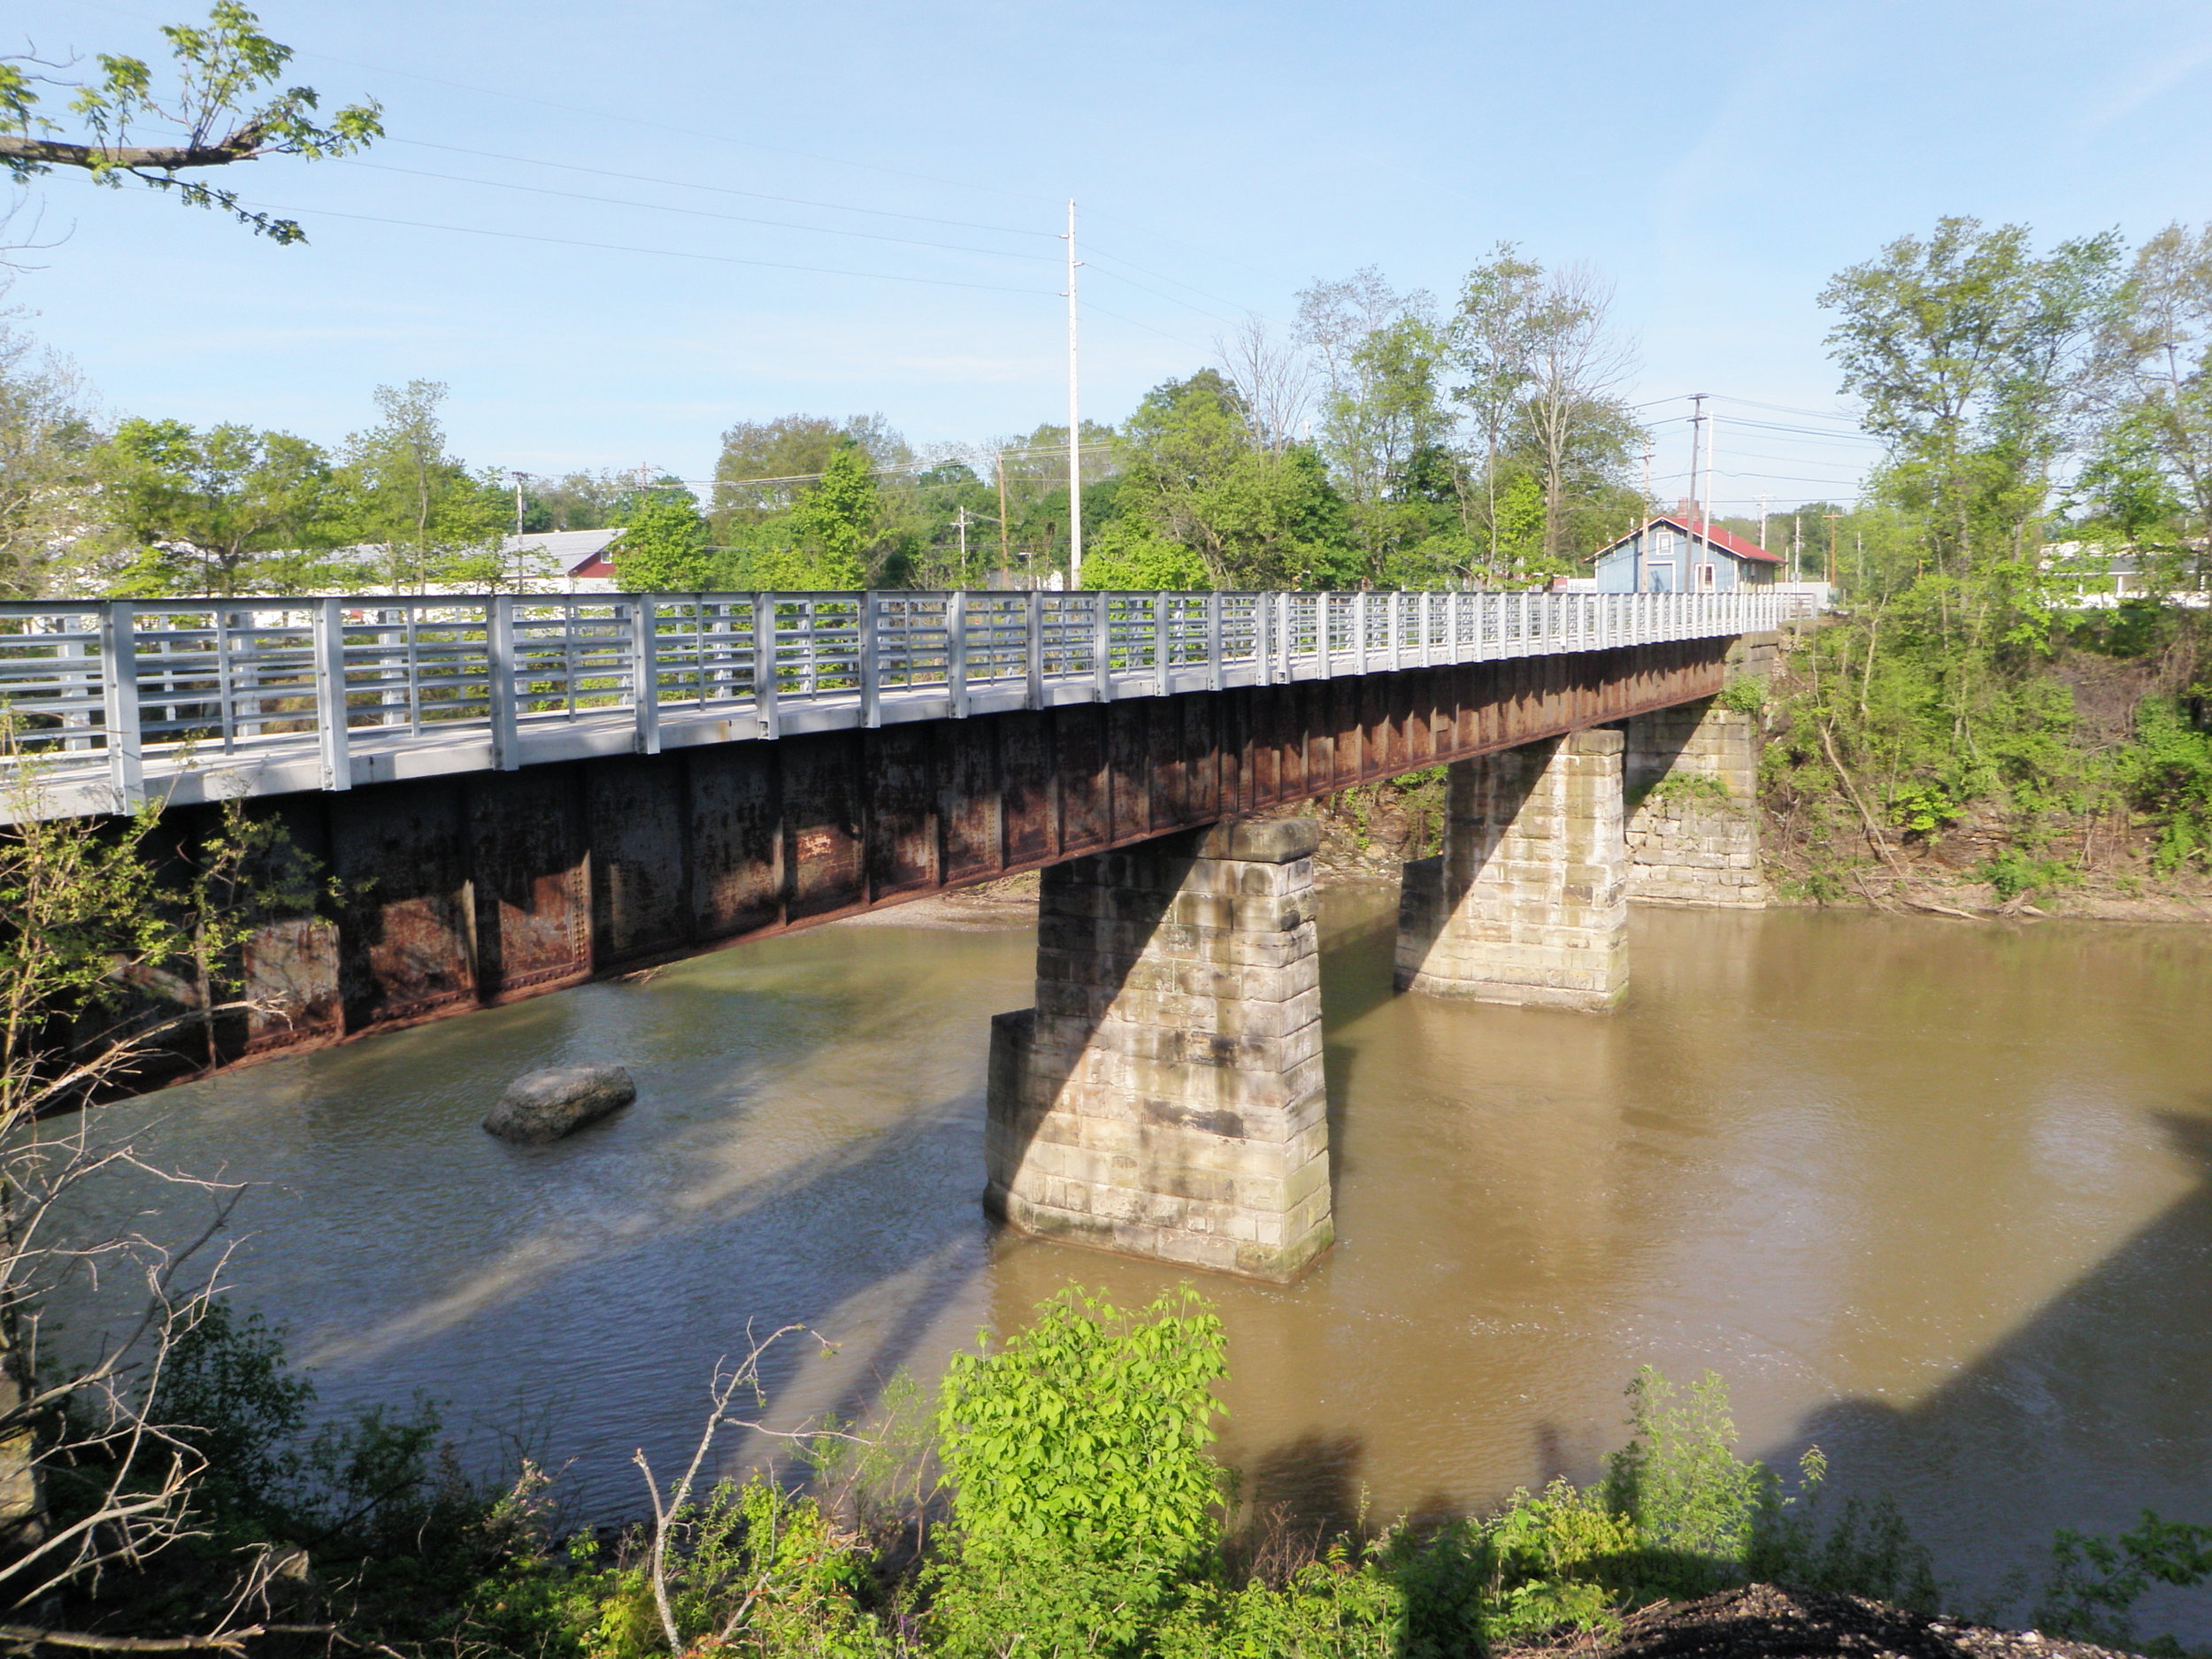 Monroeville's Huron River bridge in Huron County